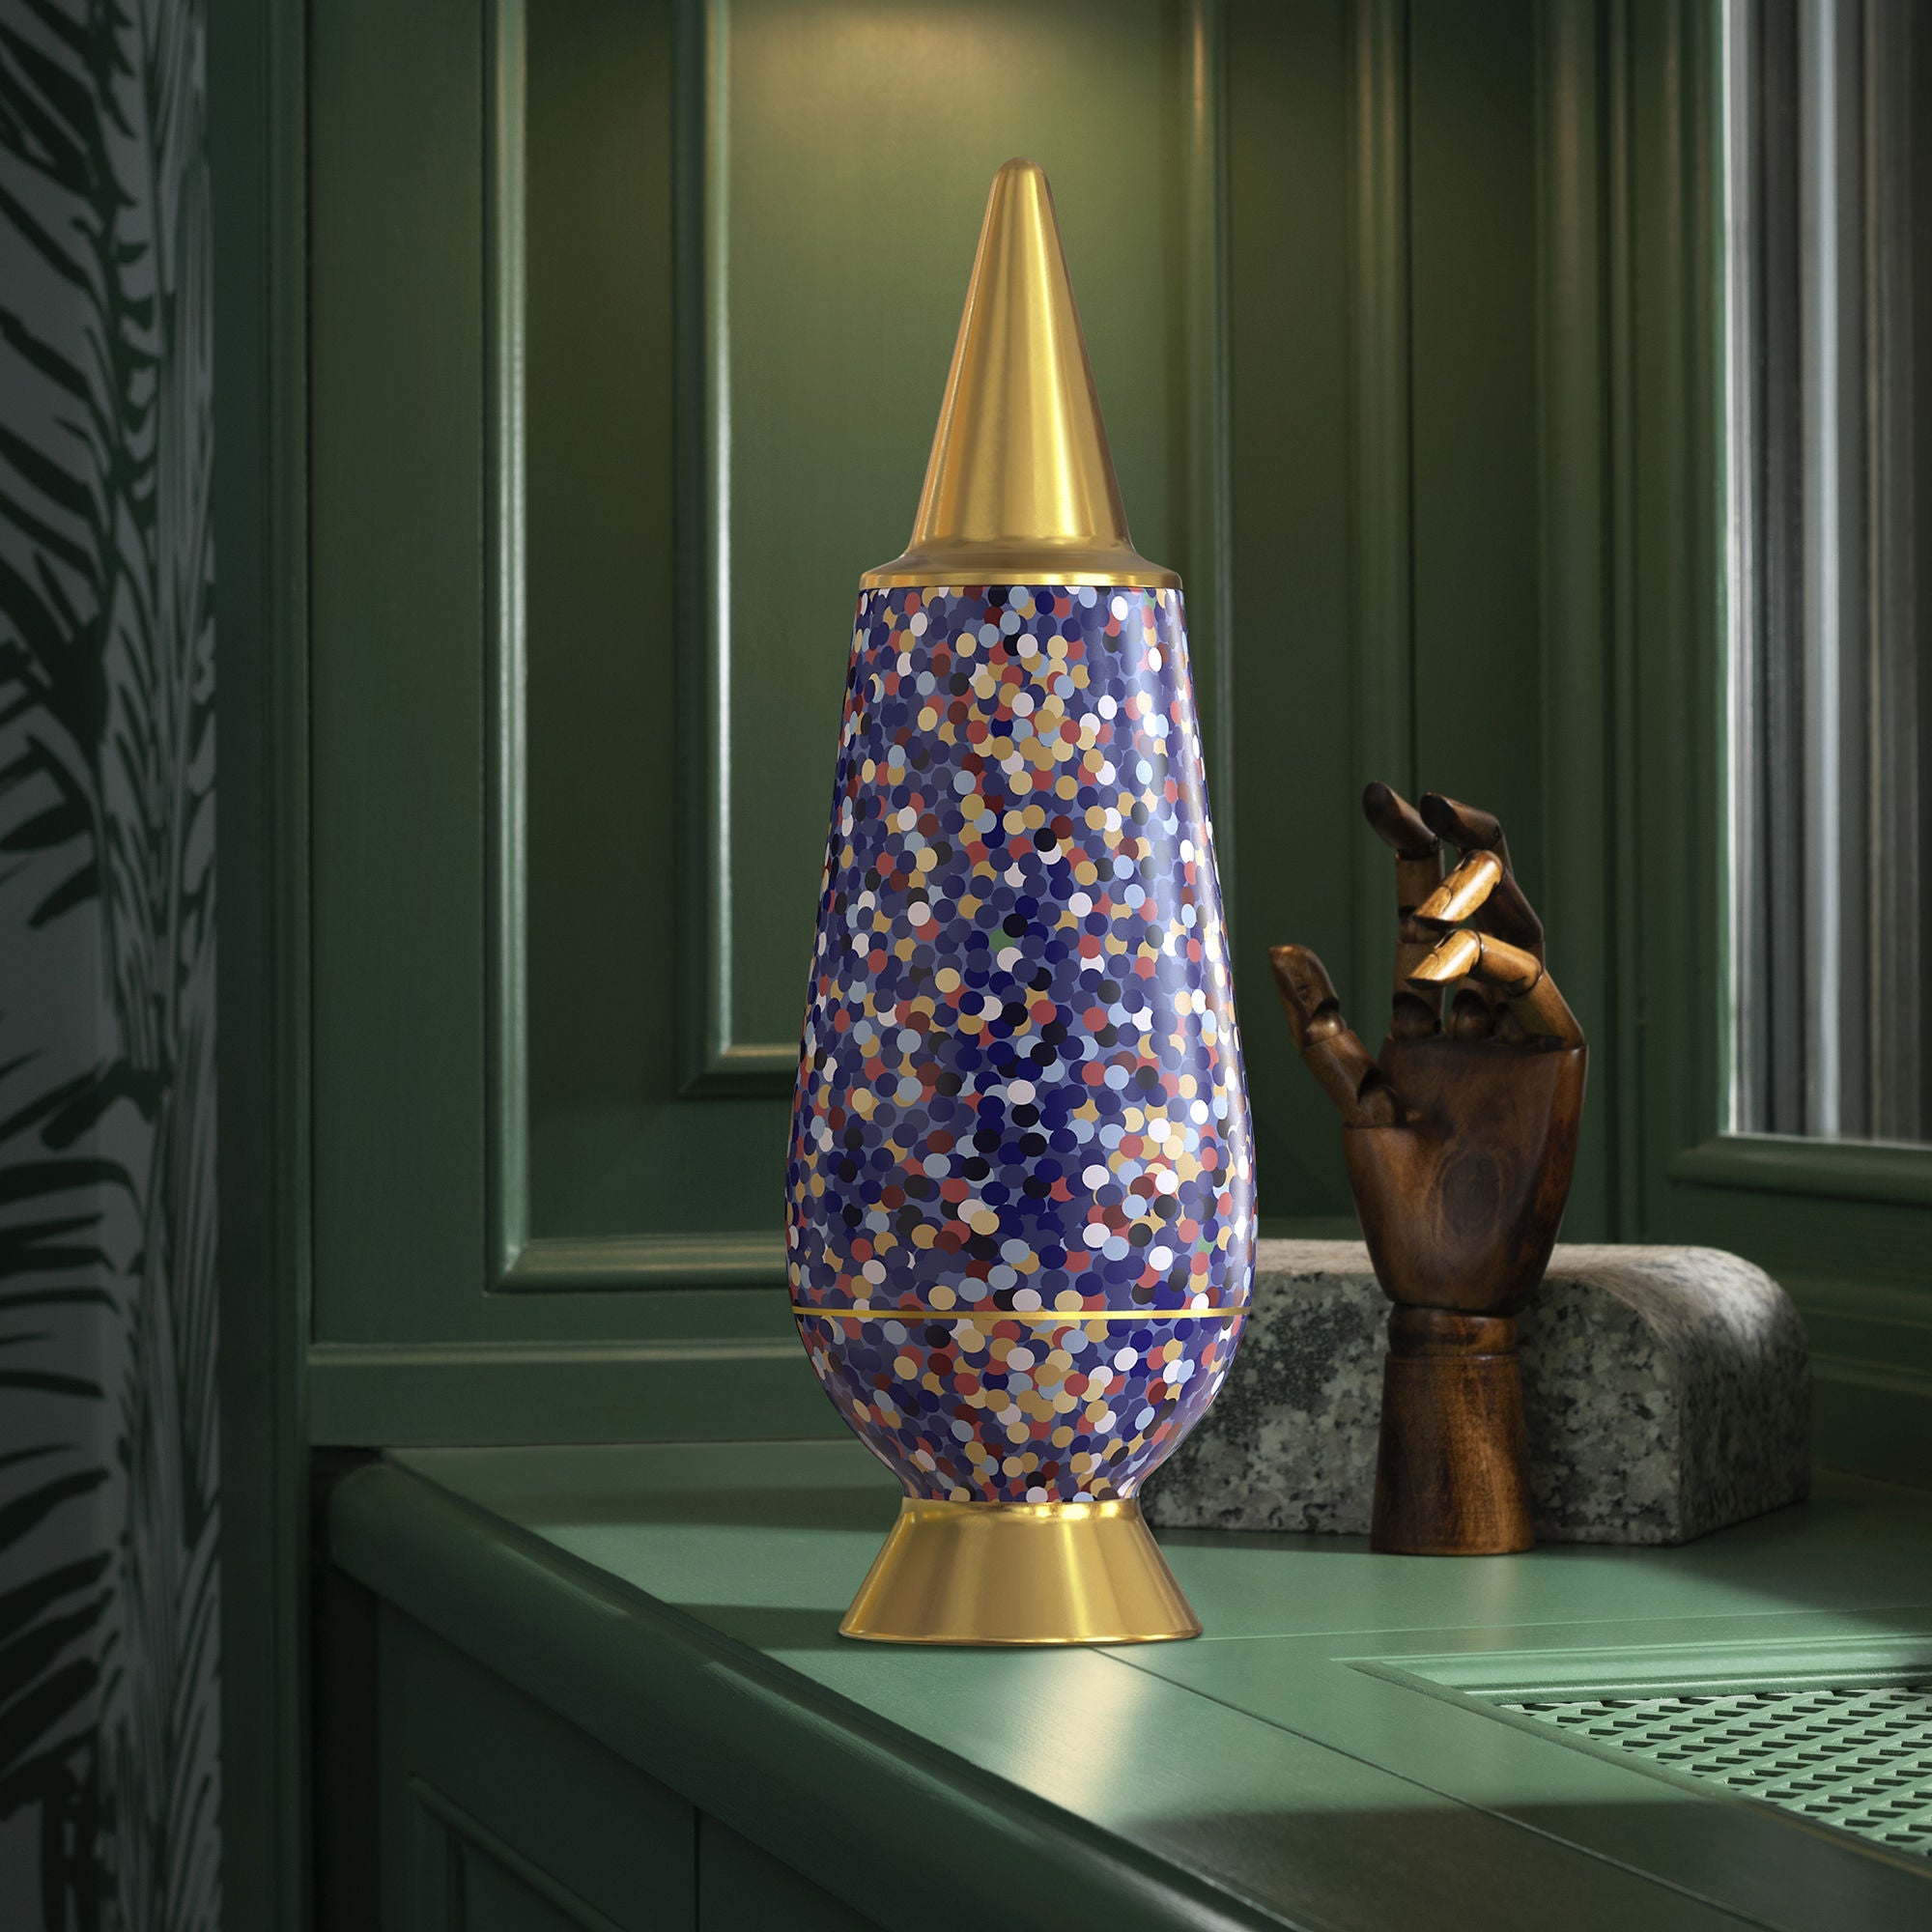 Alessi Vase w Lid 100% Make-Up Proust Limited Edition | Panik Design